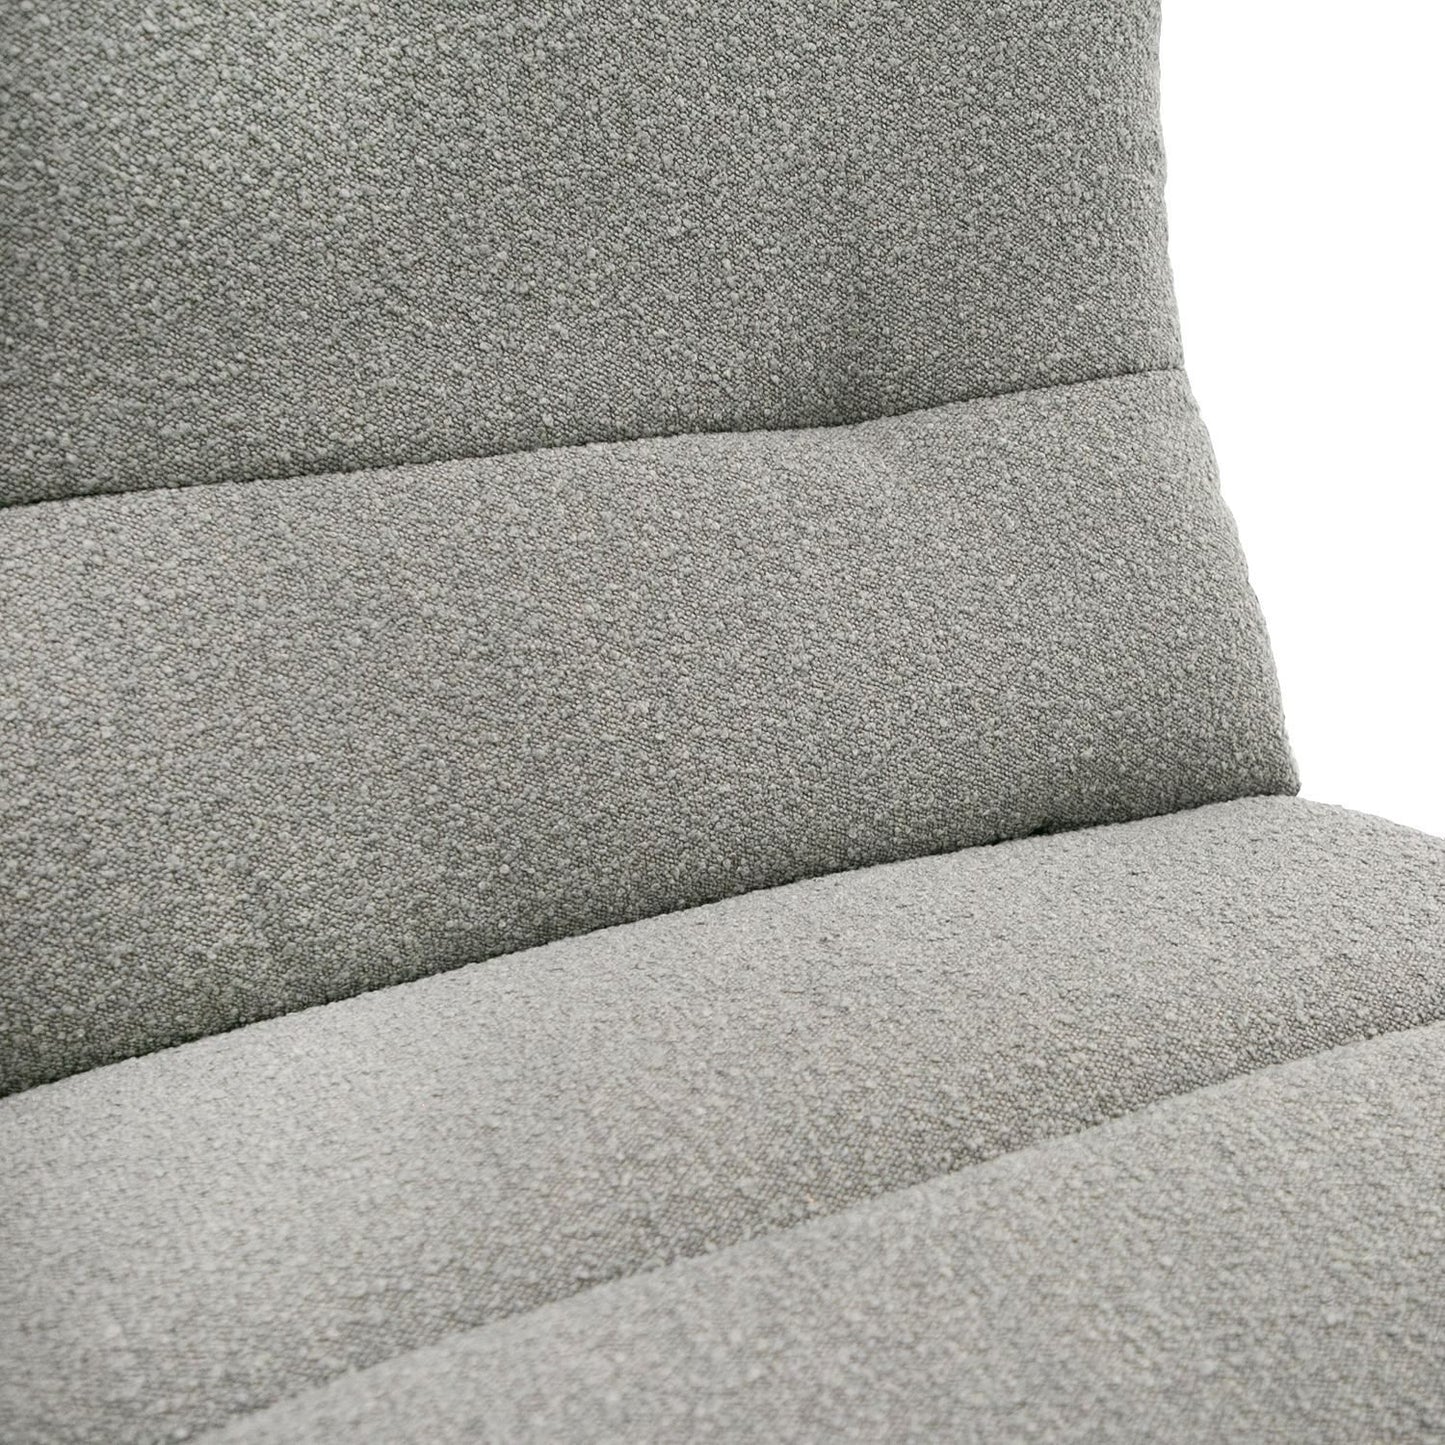 Divani Casa Basil - Modern Grey Fabric Large Sofa With 3 Electric Recliners